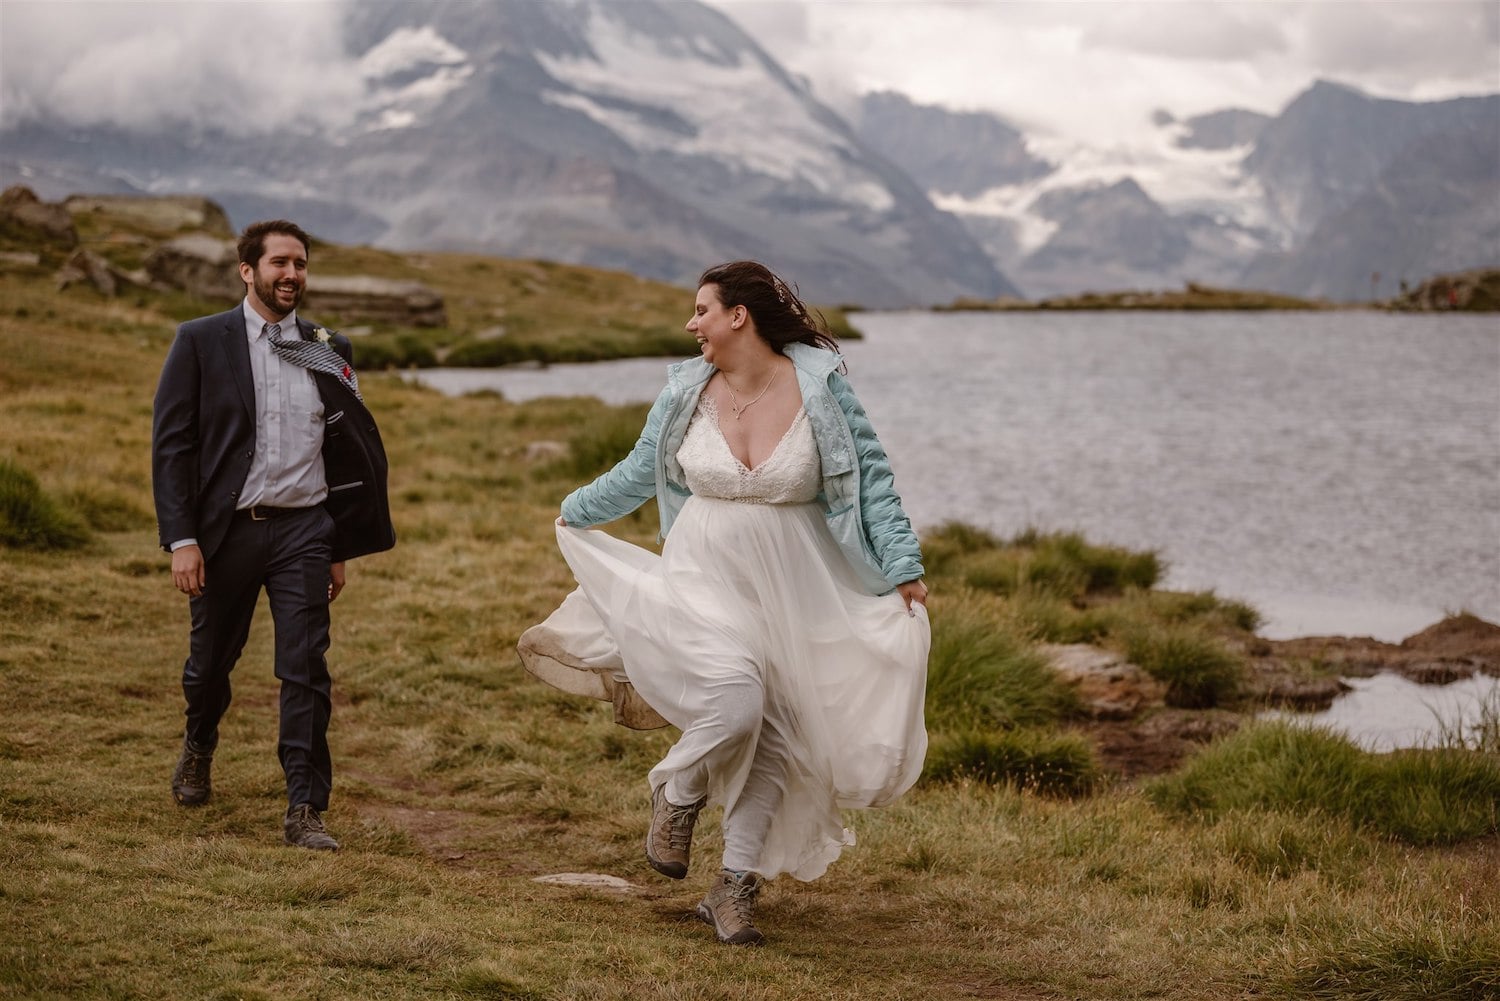 Couple running to their wedding ceremony in Switzerland